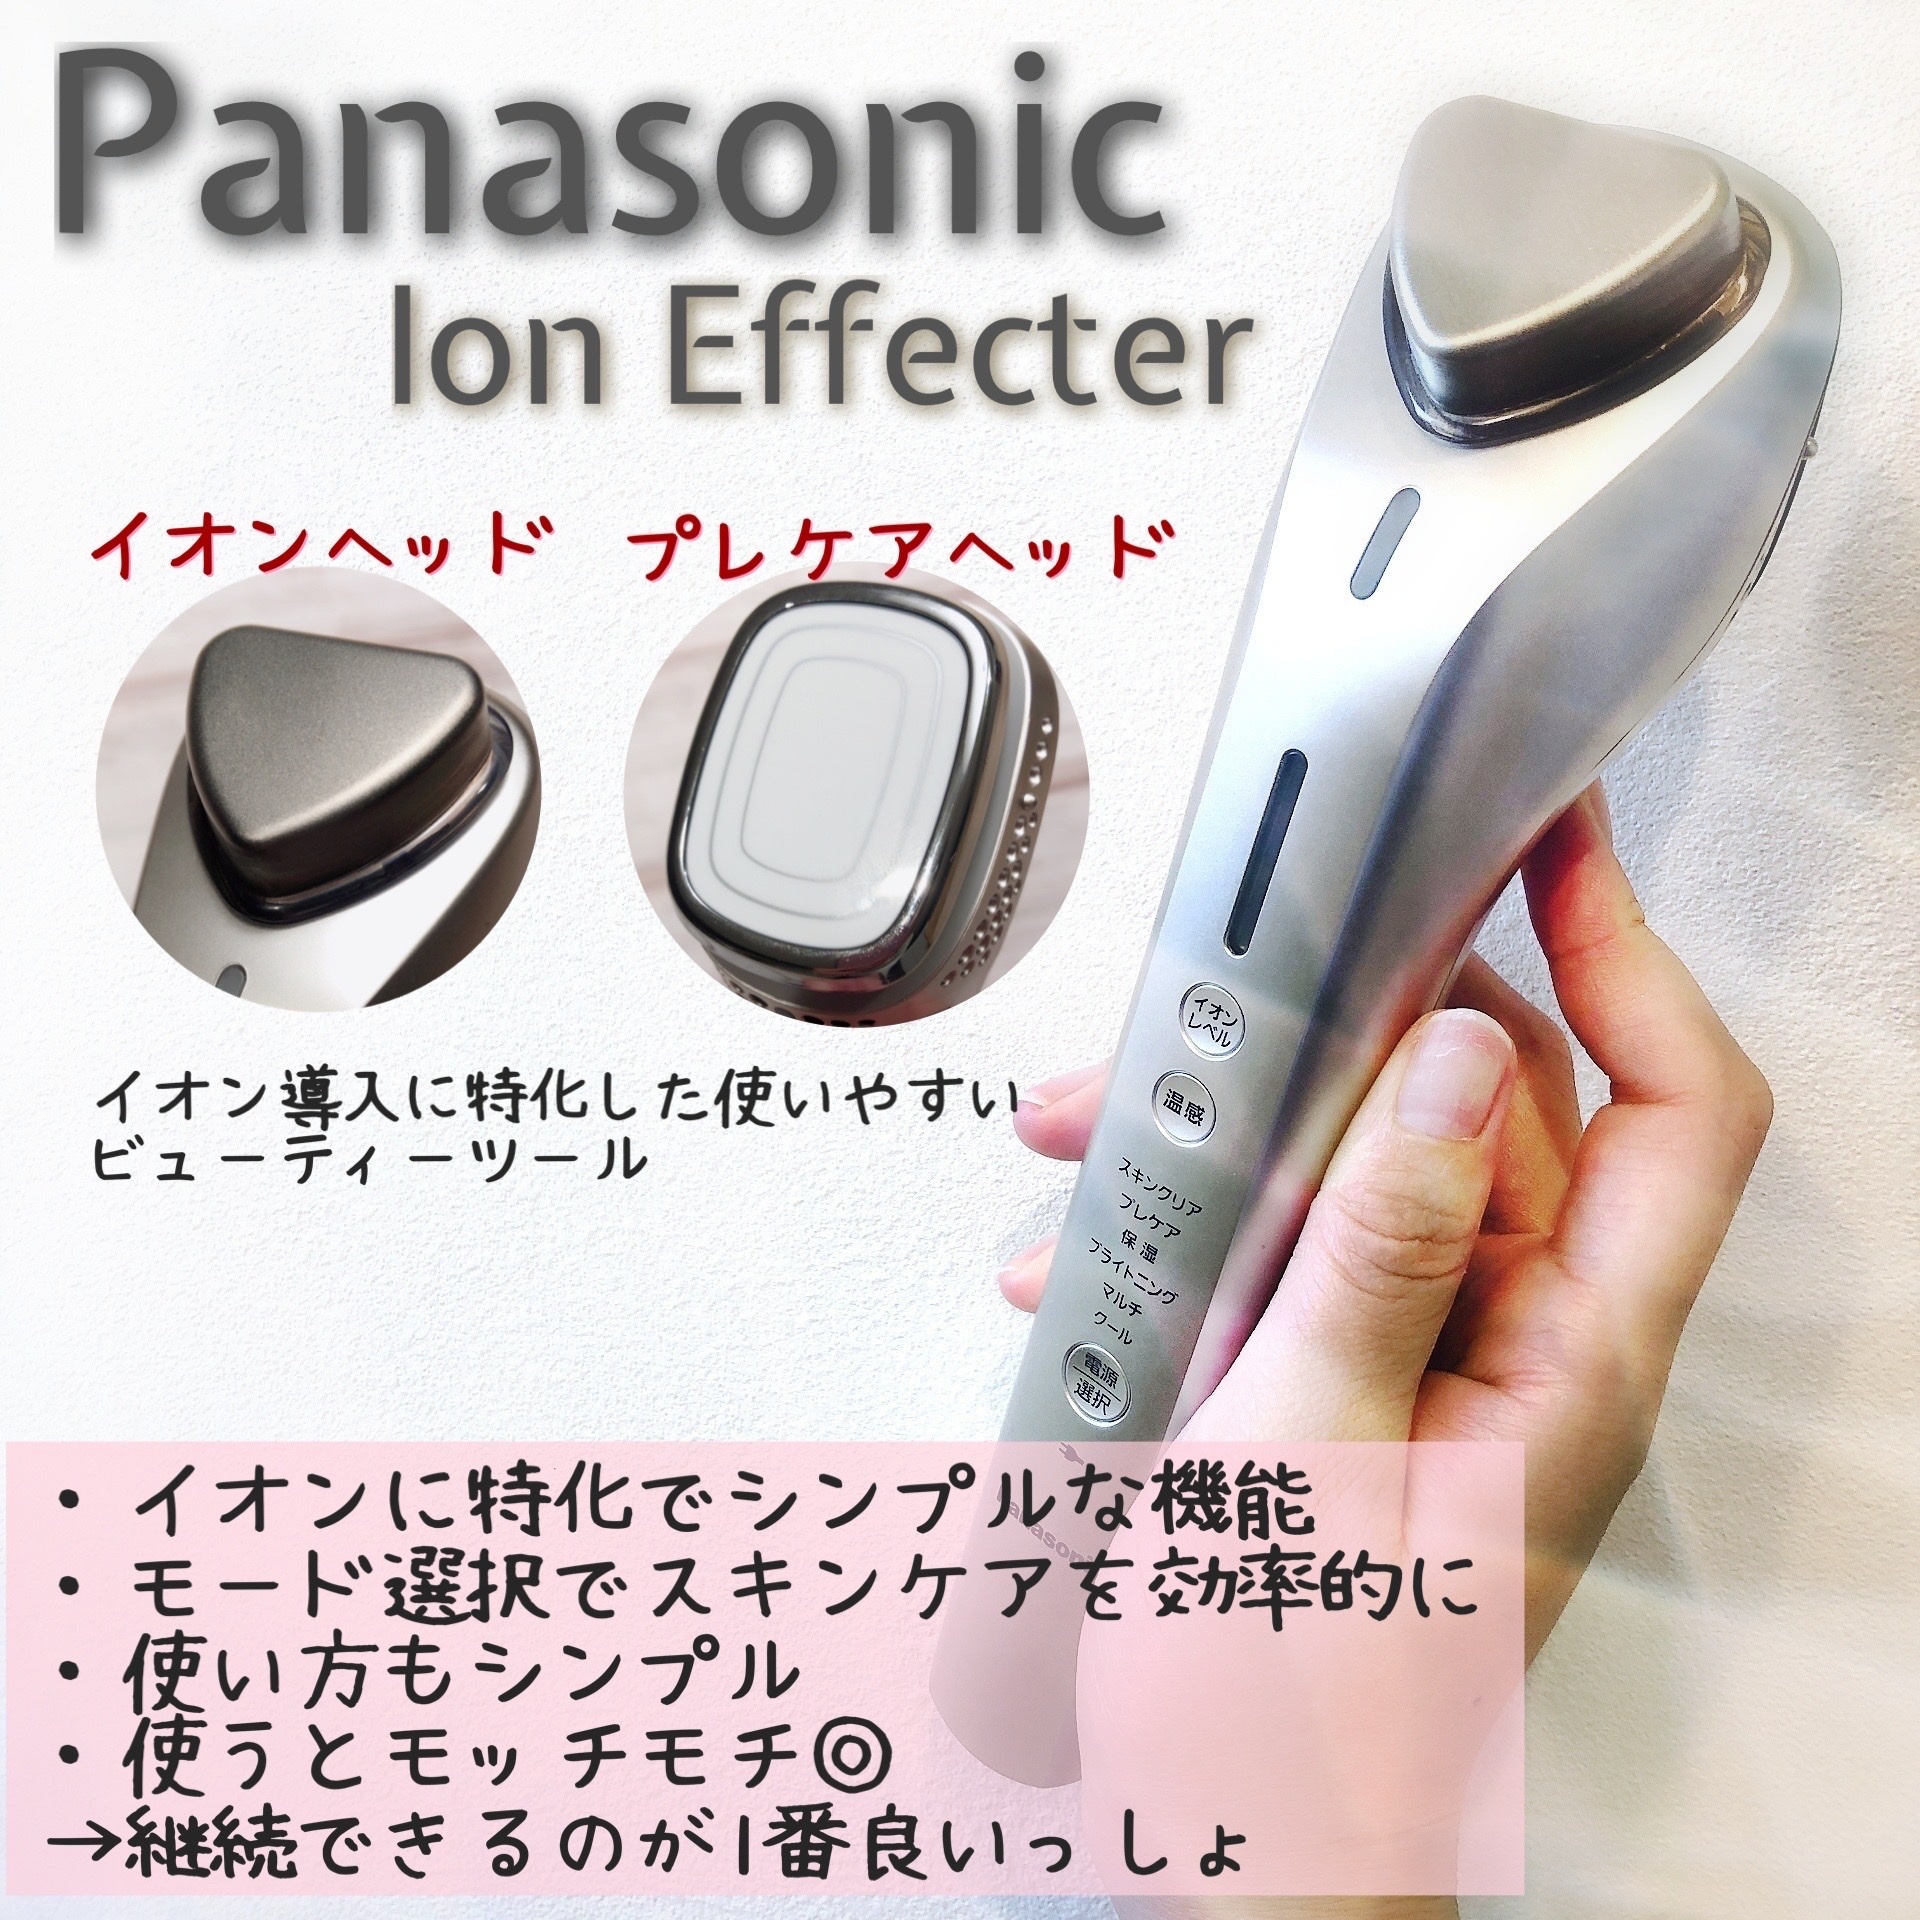 Panasonic / 導入美顔器 イオンエフェクター EH-ST98の公式商品情報 